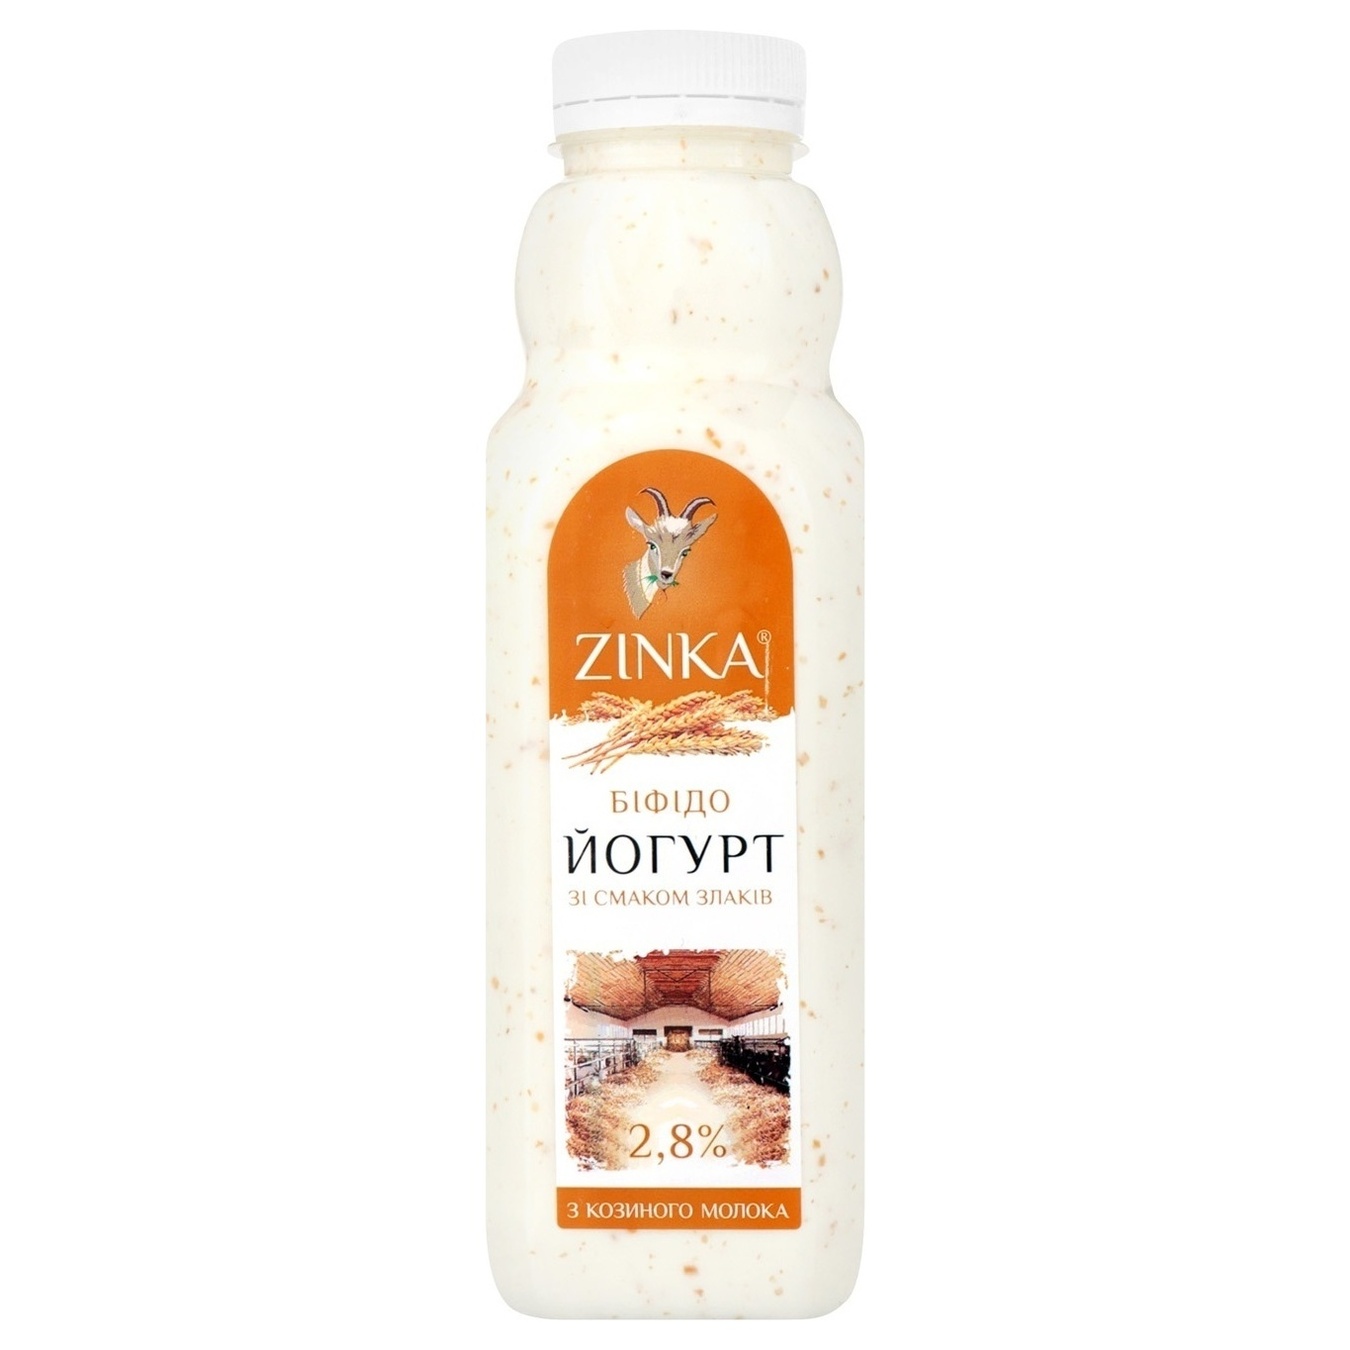 Bifidoyogurt Zinka Goat's Milk Cereal flavored 2,8% 300g